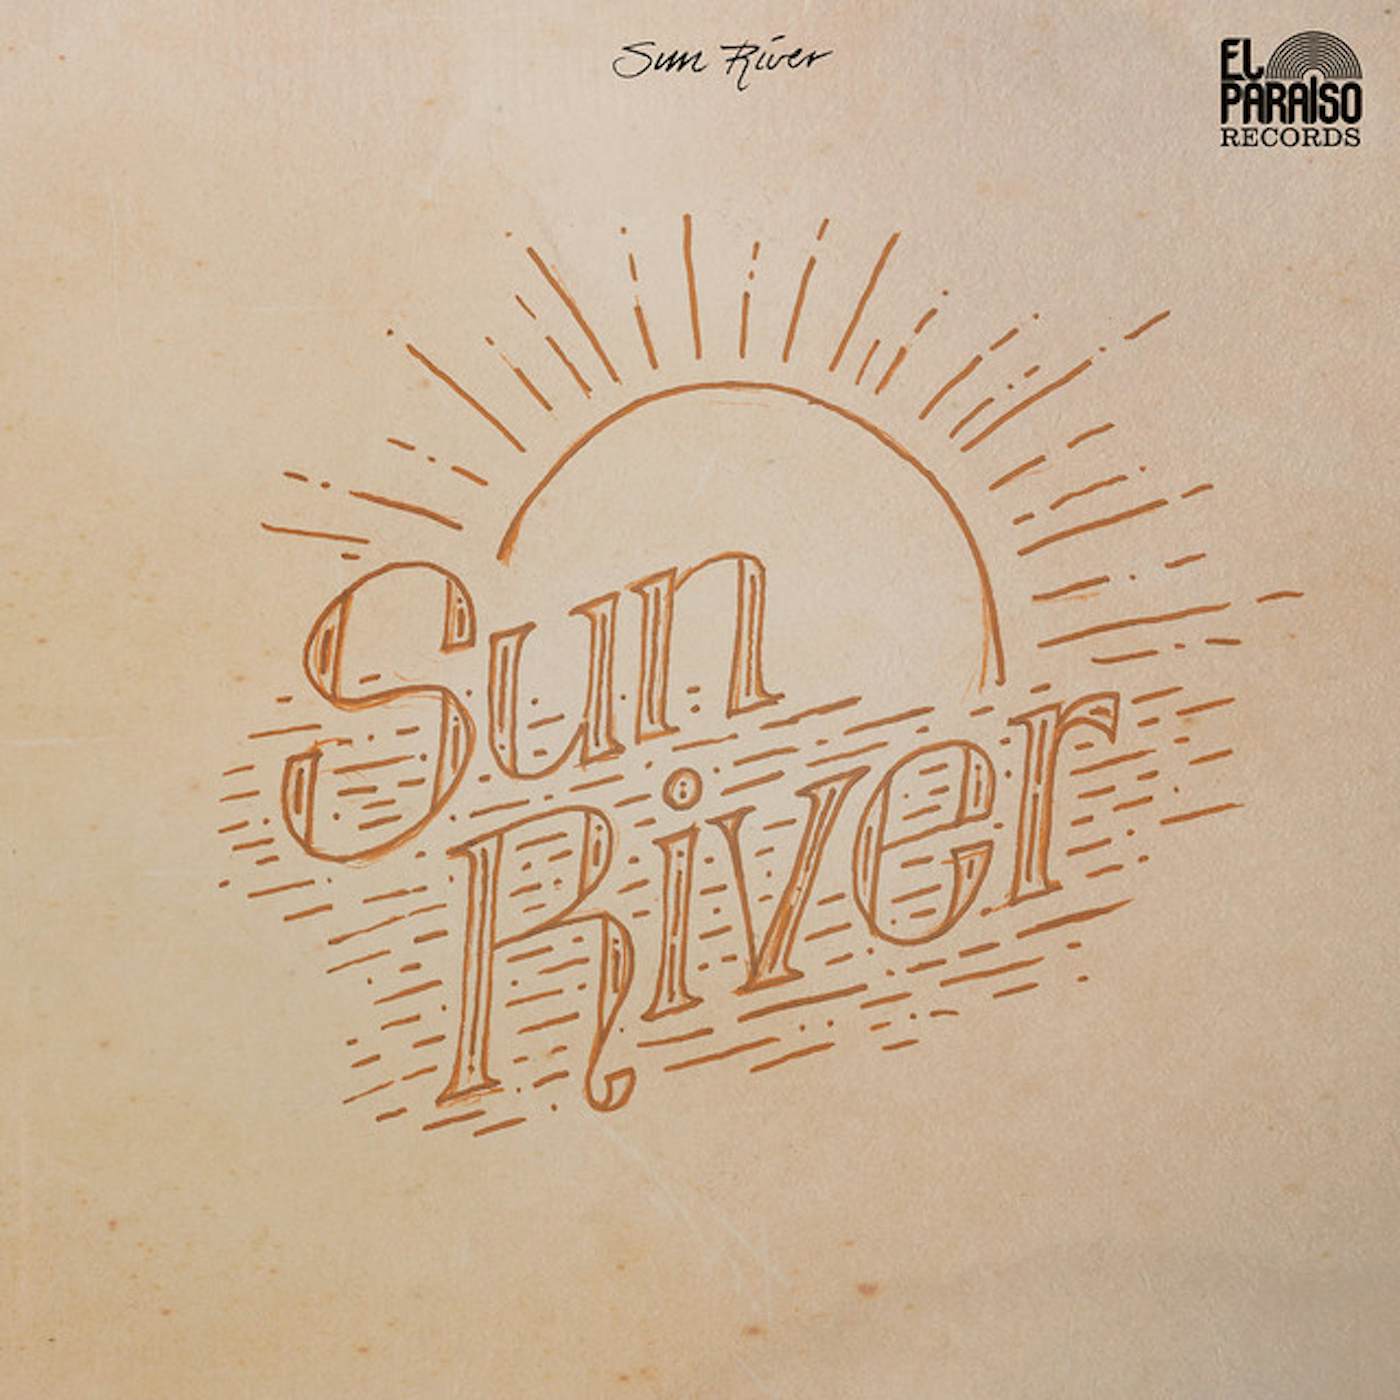 Sun River Vinyl Record